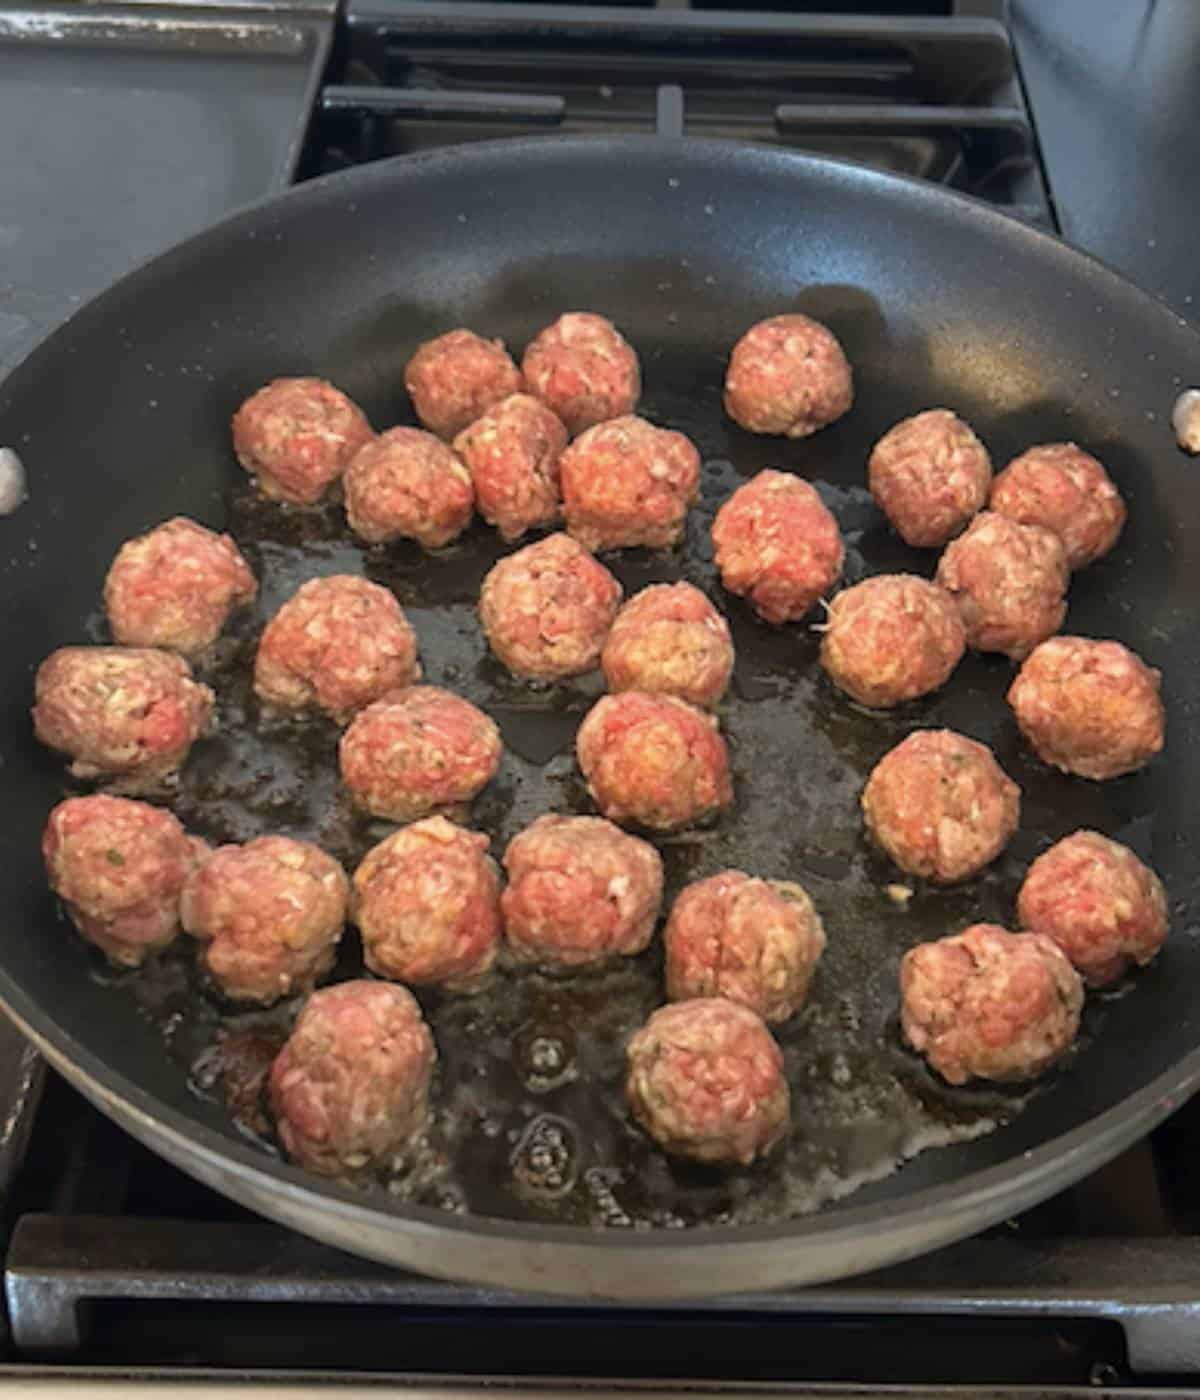 Mini meatballs cooking in skillet.